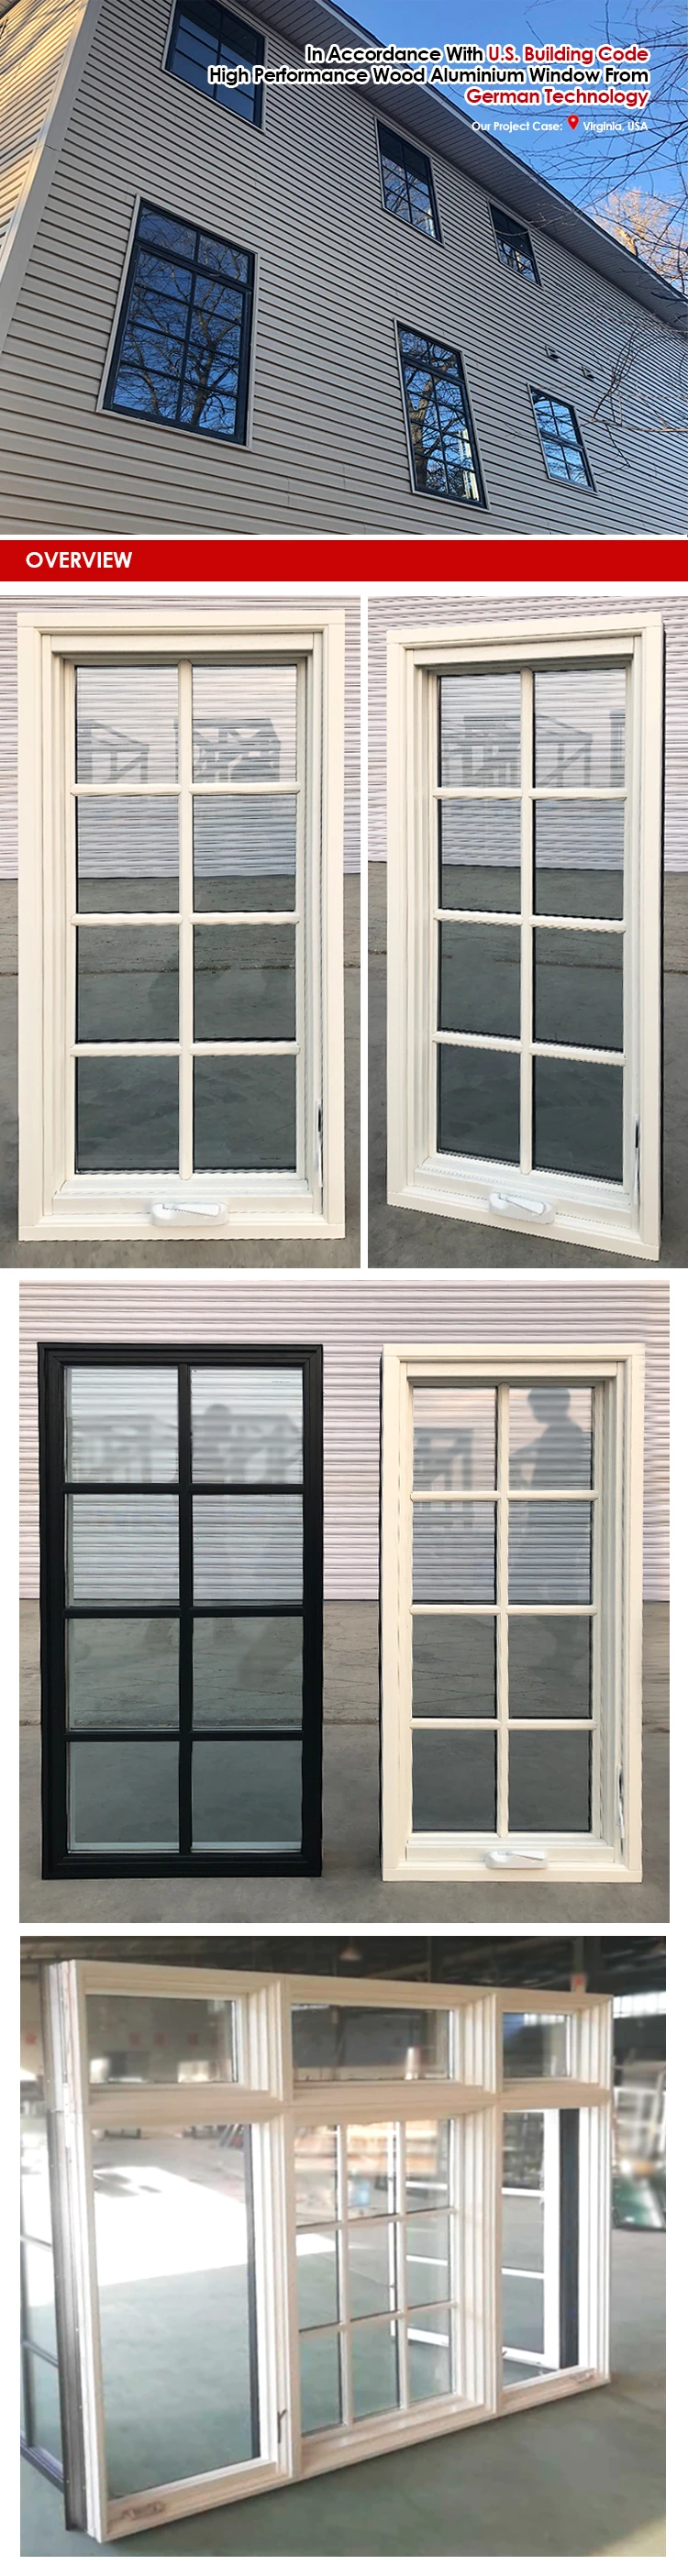 New Jersey retrofit aluminium restoring old residential crank handle casement windows